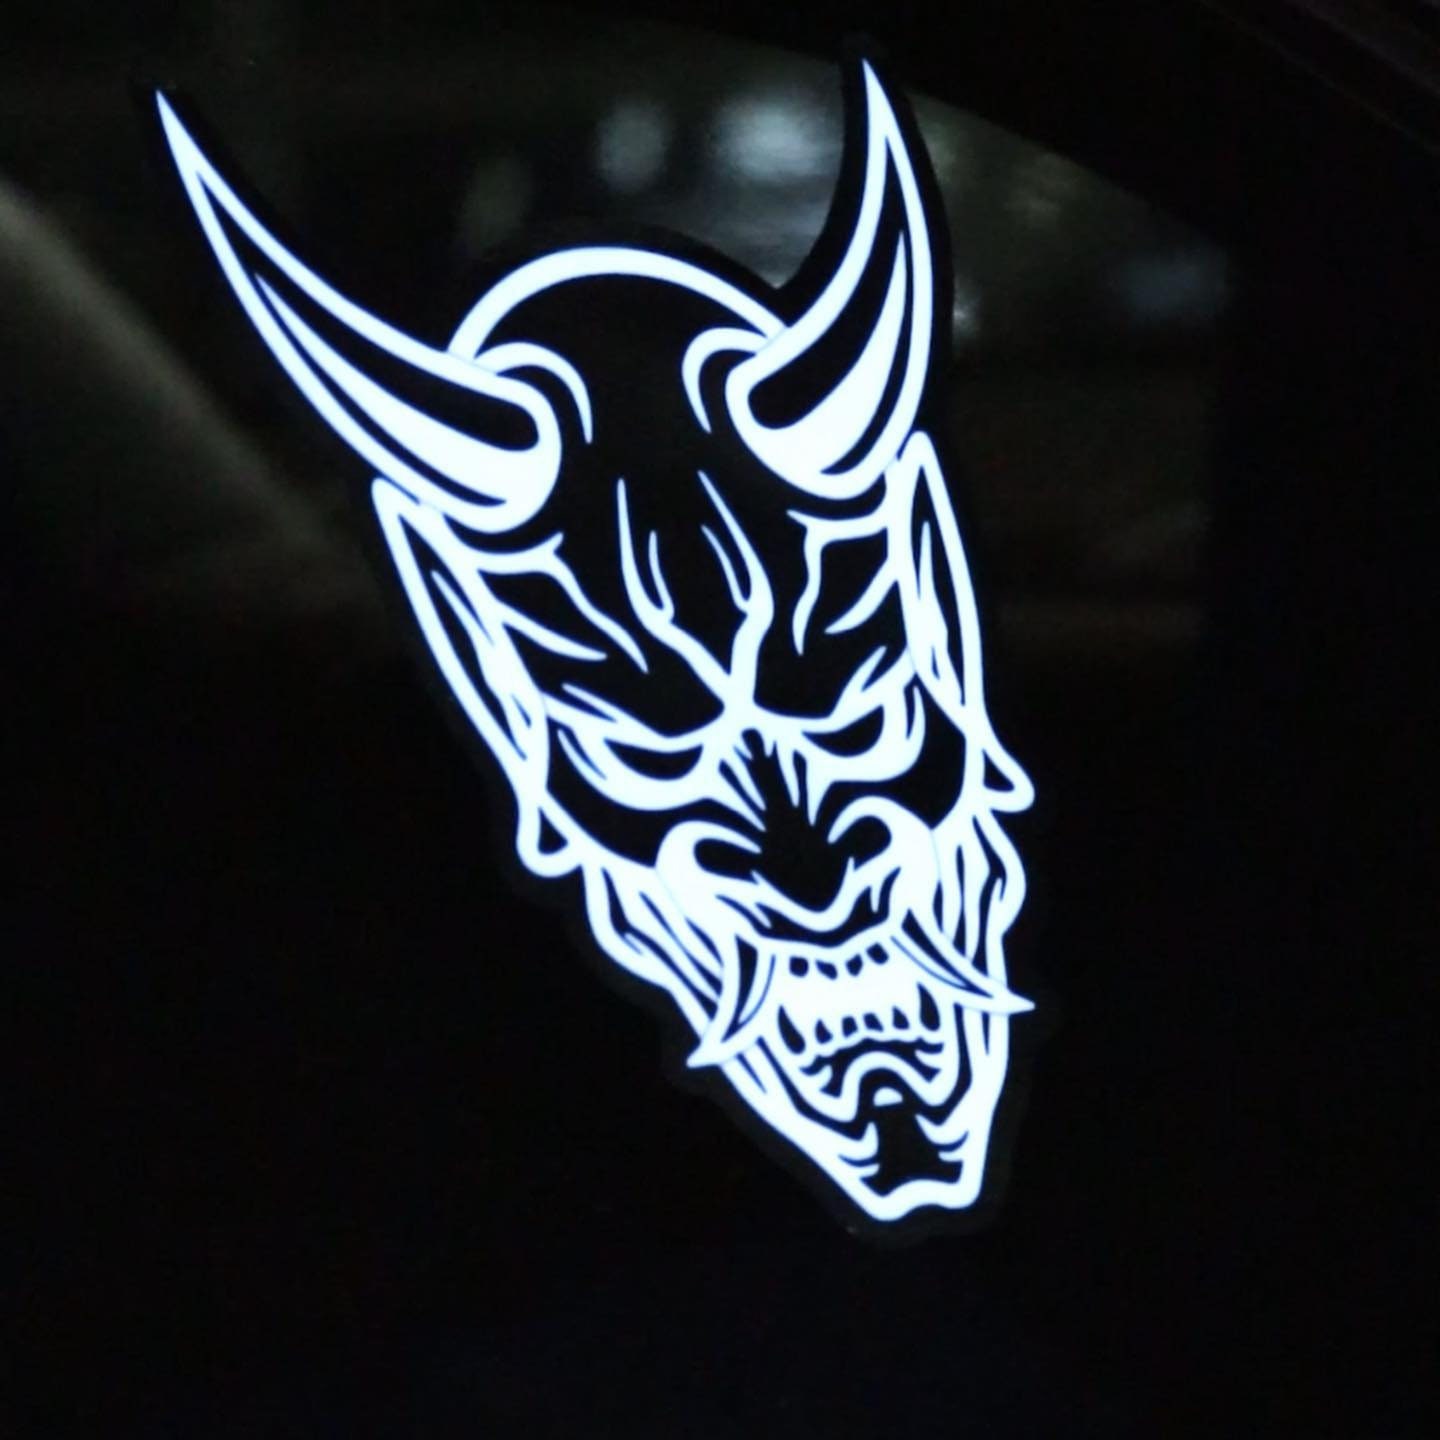 Car Decals - Car Stickers, Demon Mask Car Decal